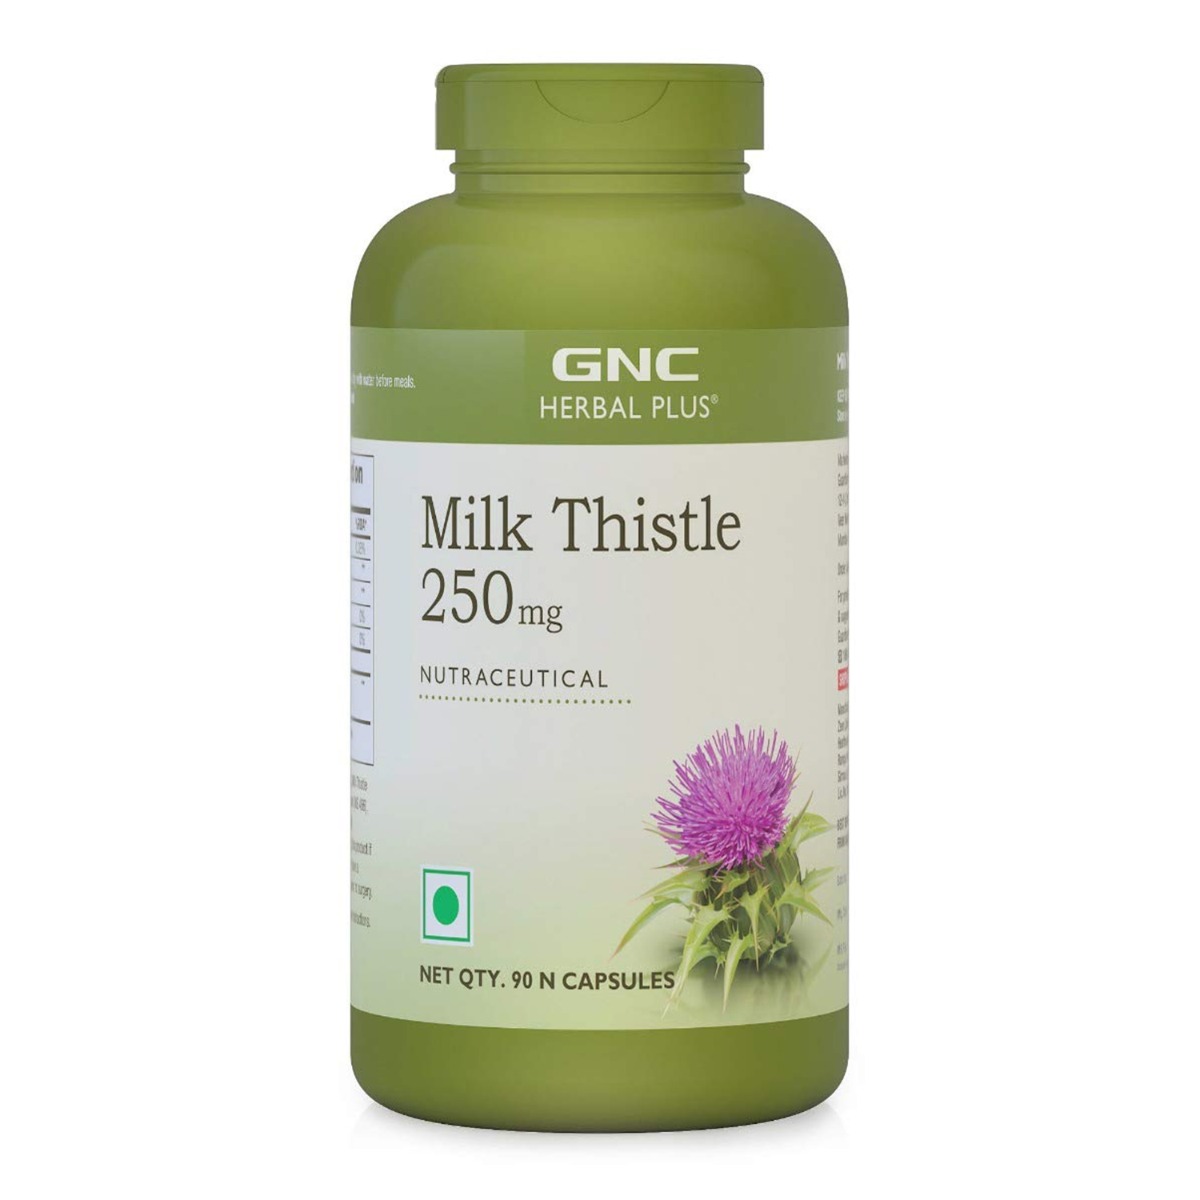 GNC Herbal Plus Milk Thistle 250mg, 90 Capsules